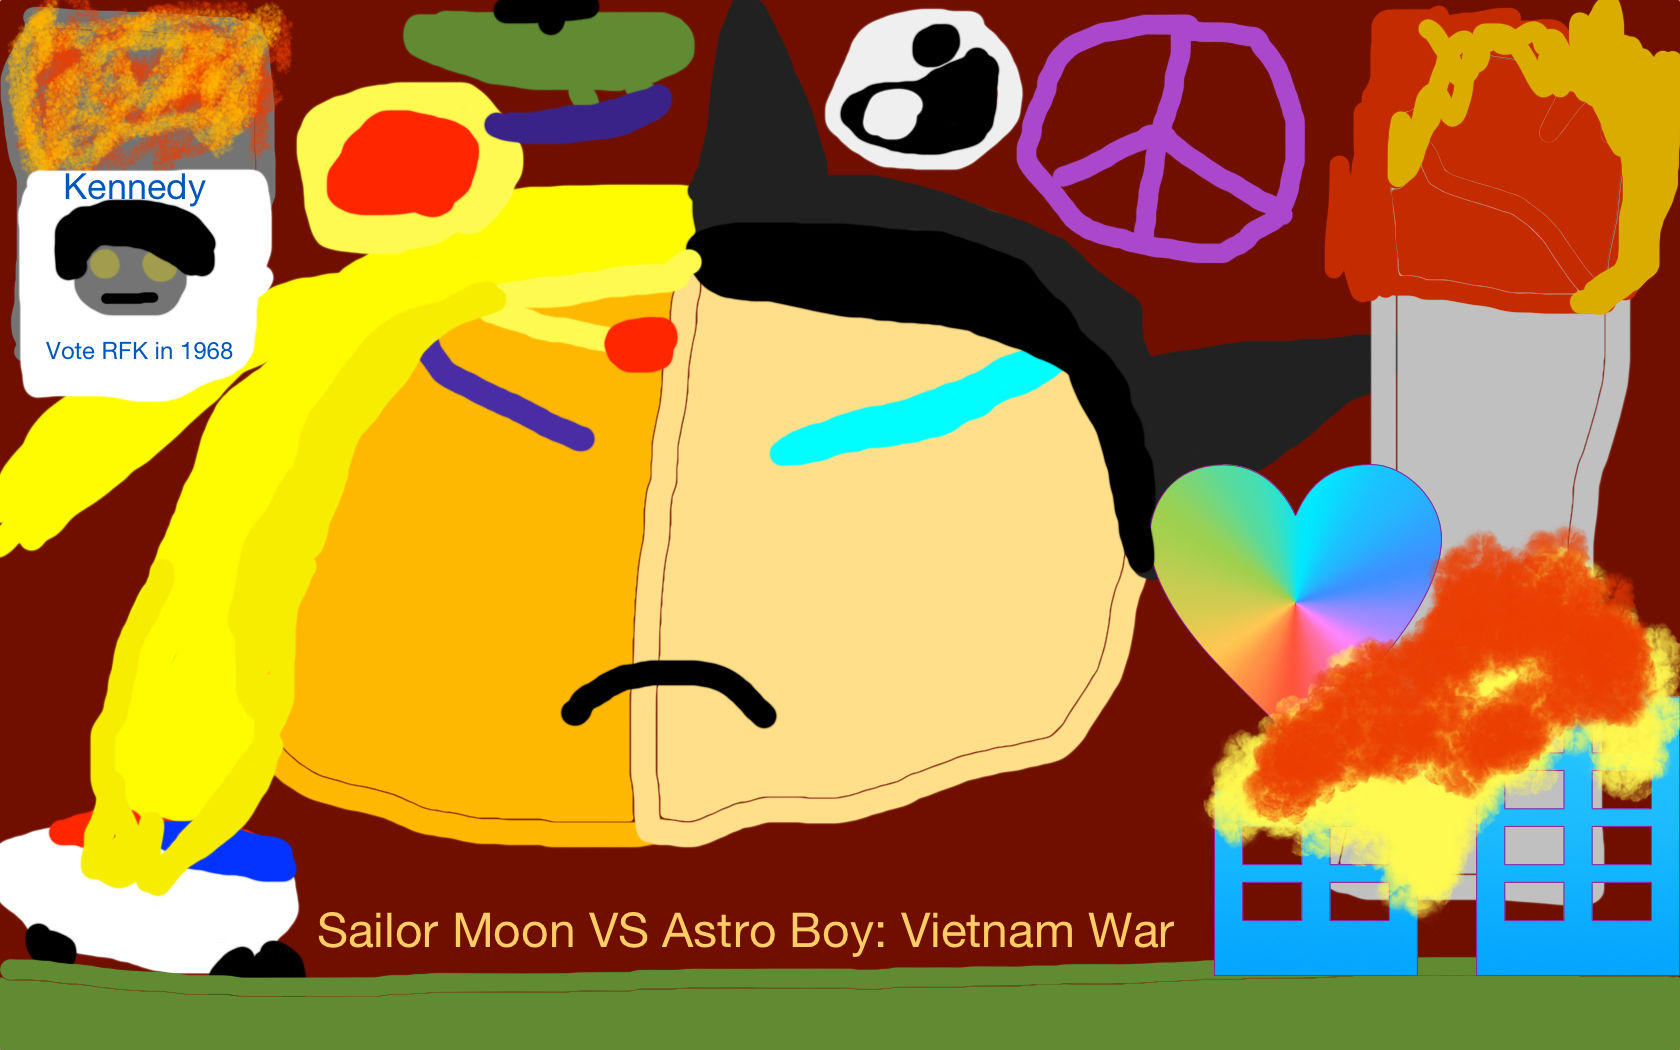 SAILOR MOON VS ASTRO BOY: VIETNAM WAR 